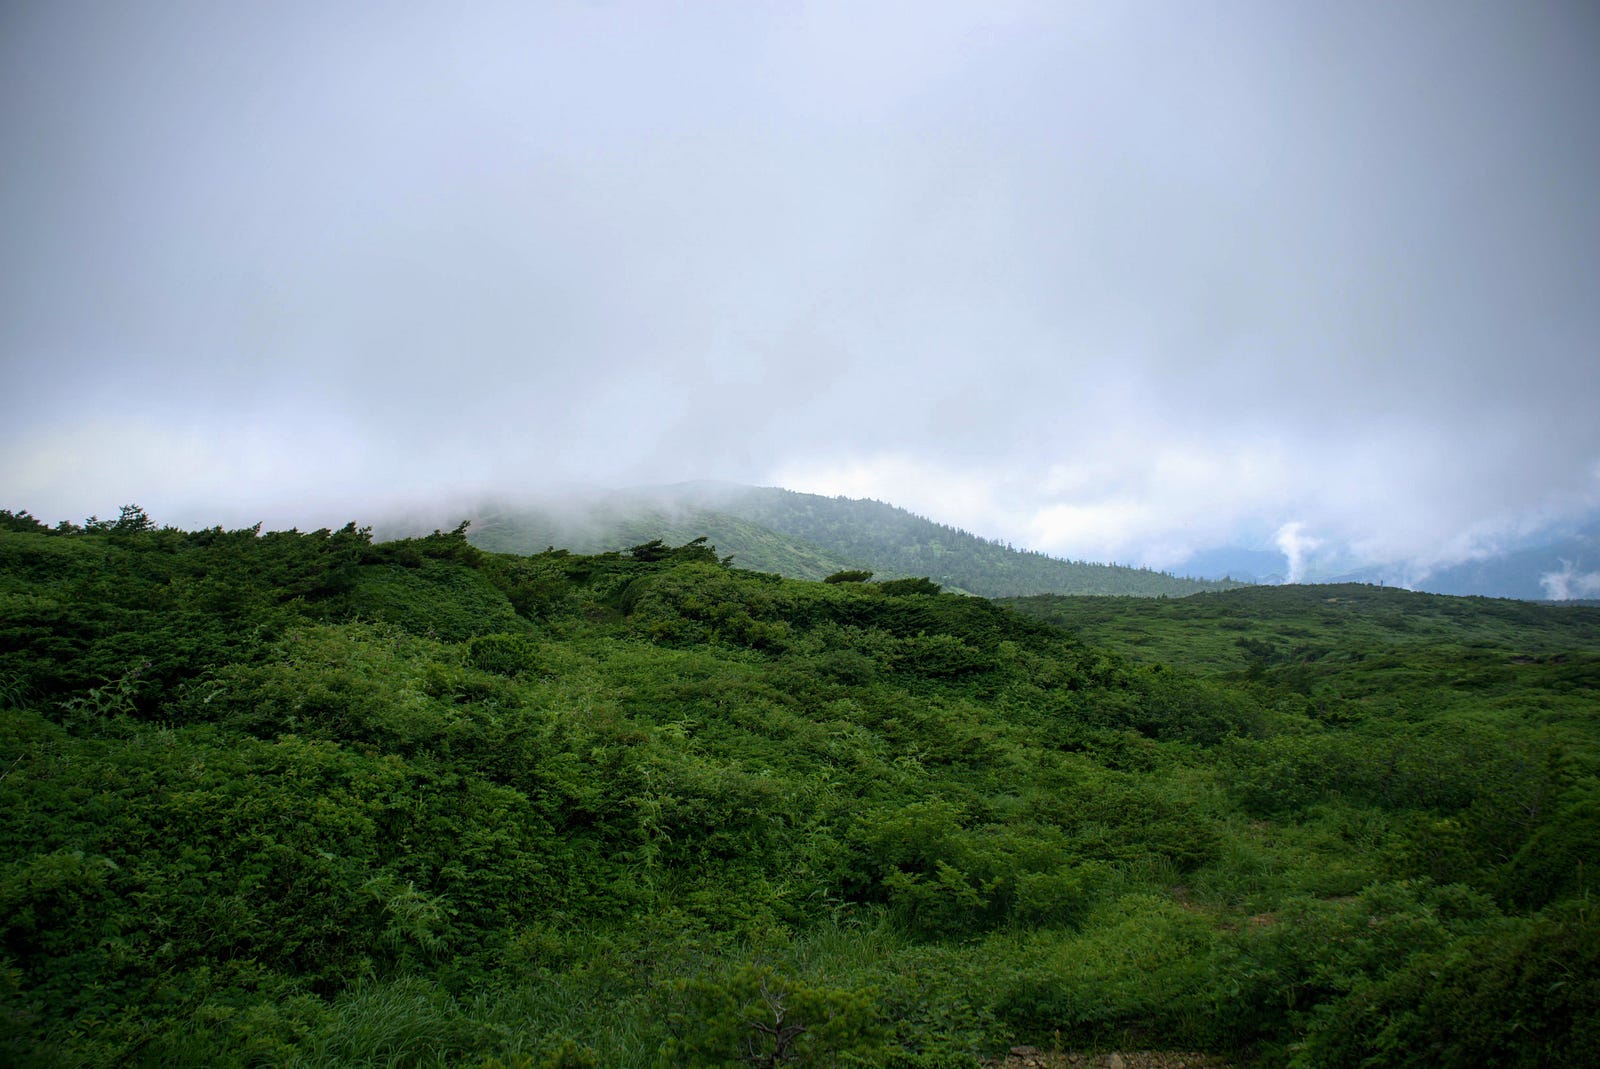 A huge cloud hangs over the green mountains of Zao-san (Mt. Zao).